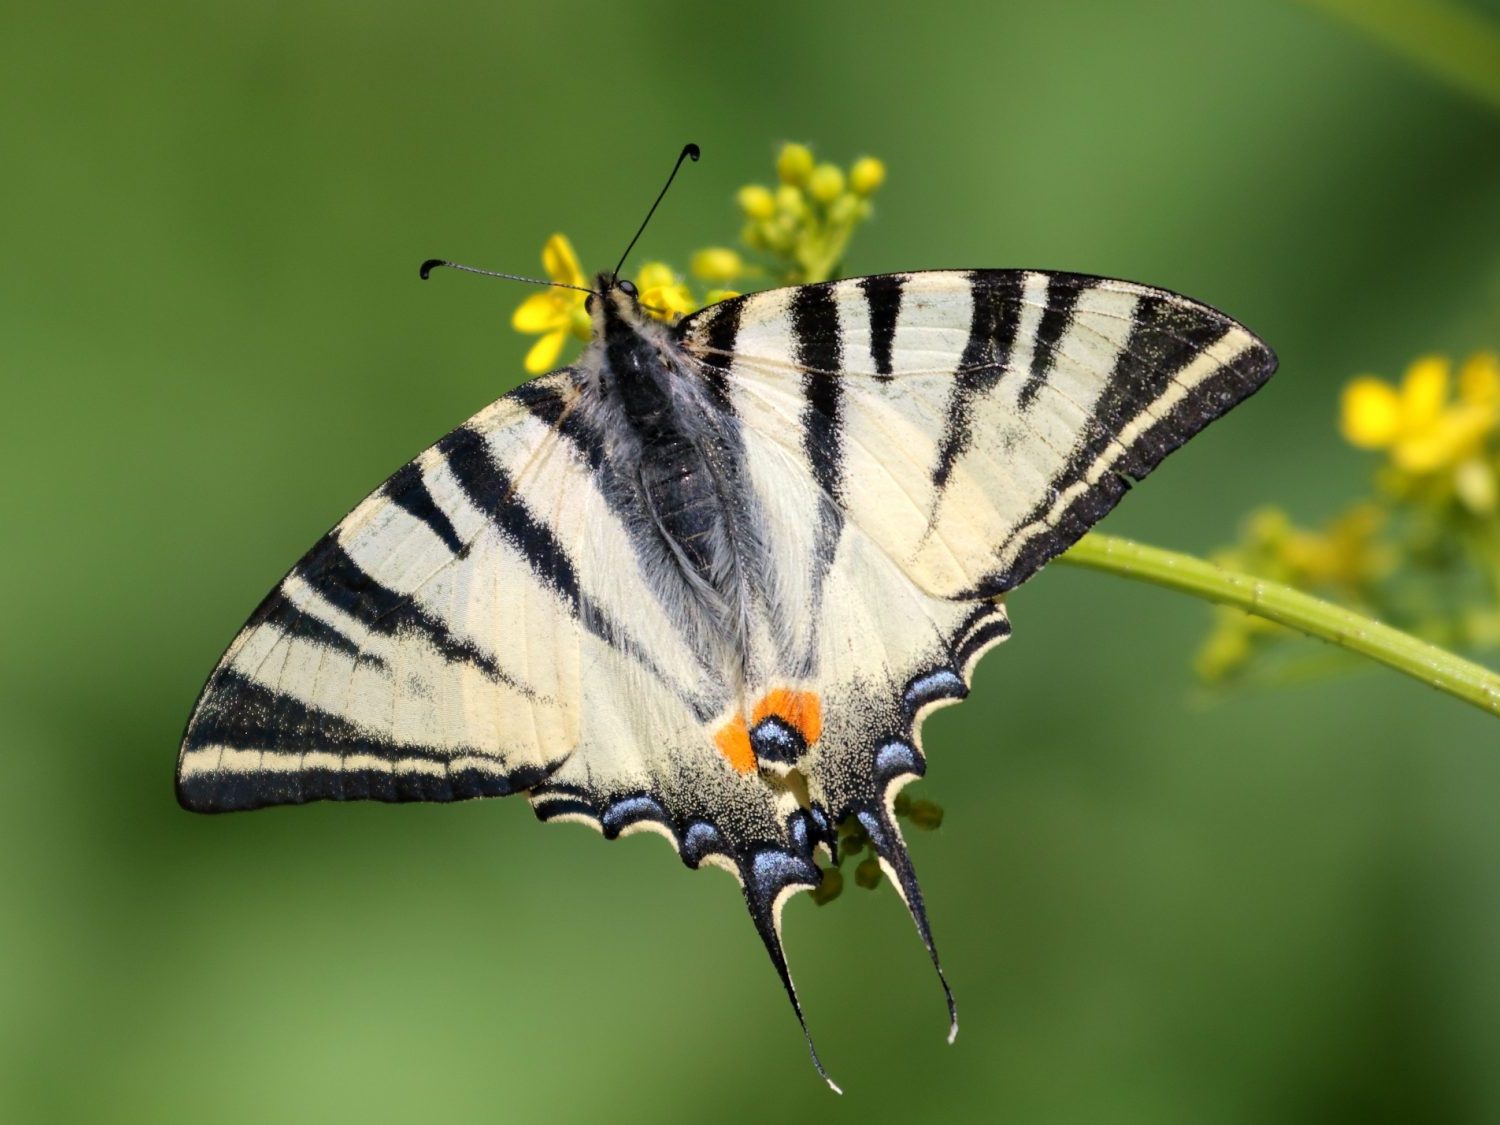 Scarce Swallowtail feeding on a yellow flower in the Danube Delta